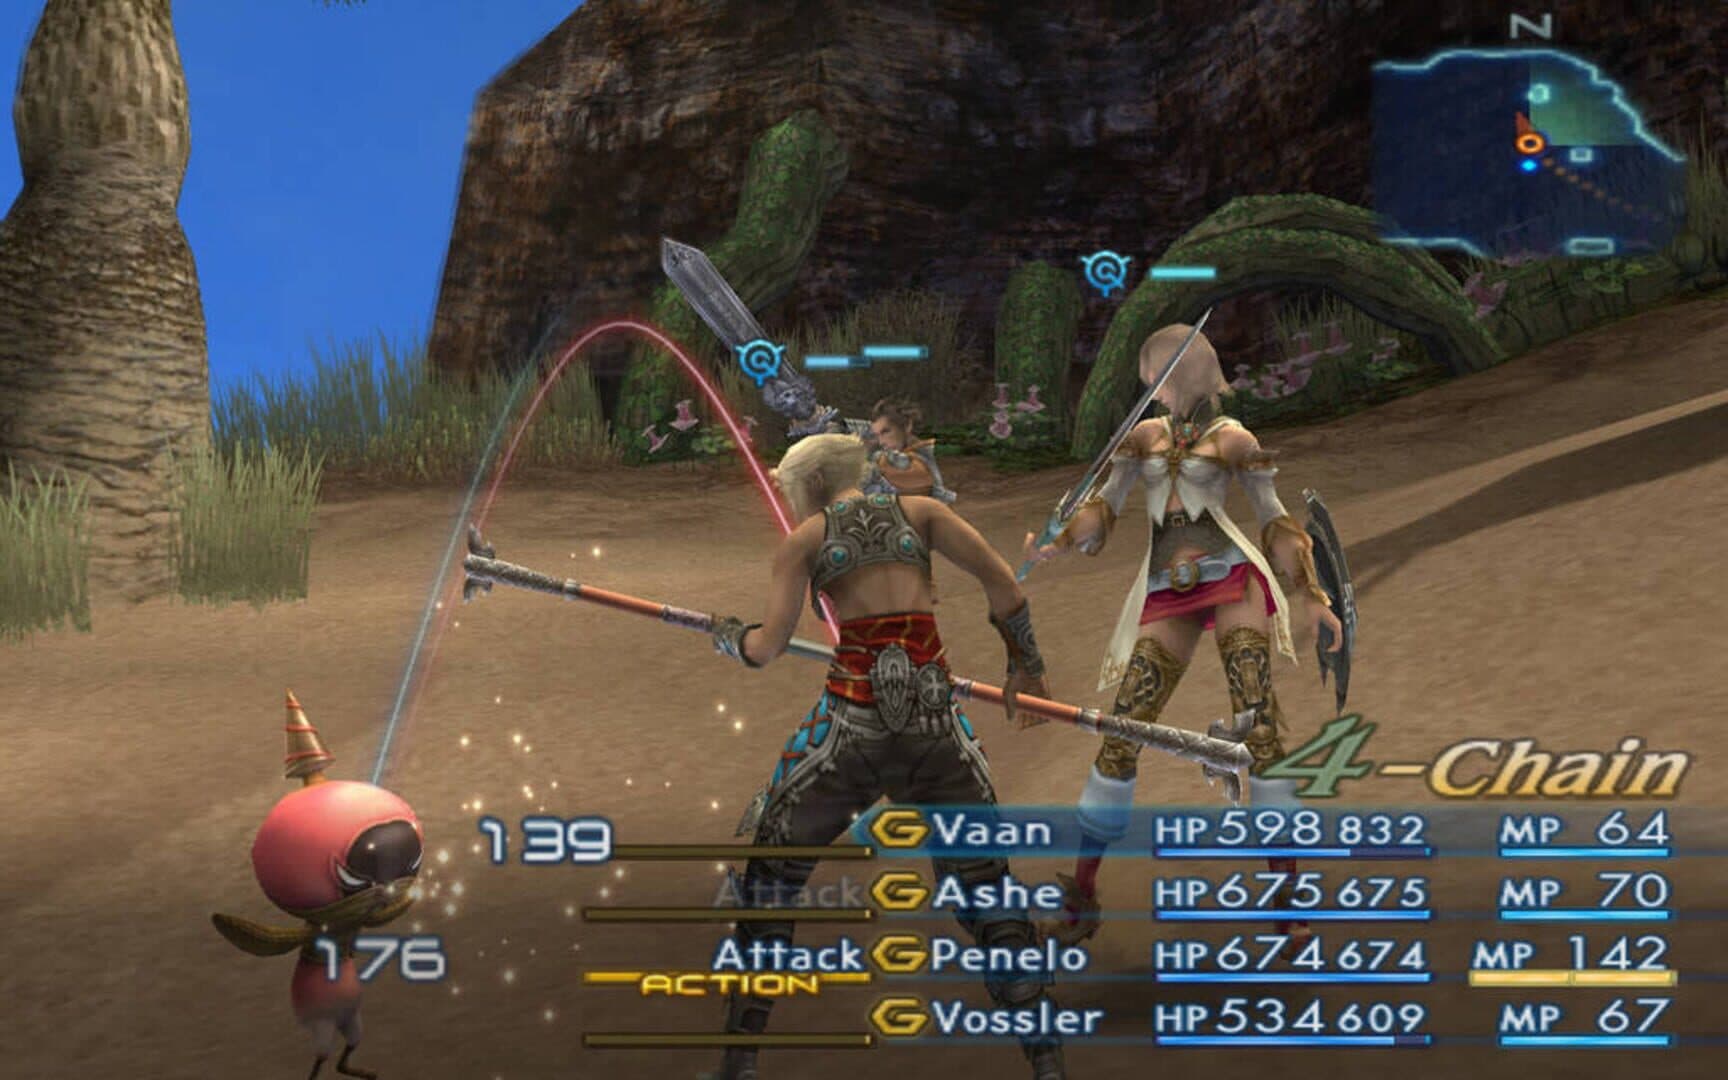 Final Fantasy XII Image